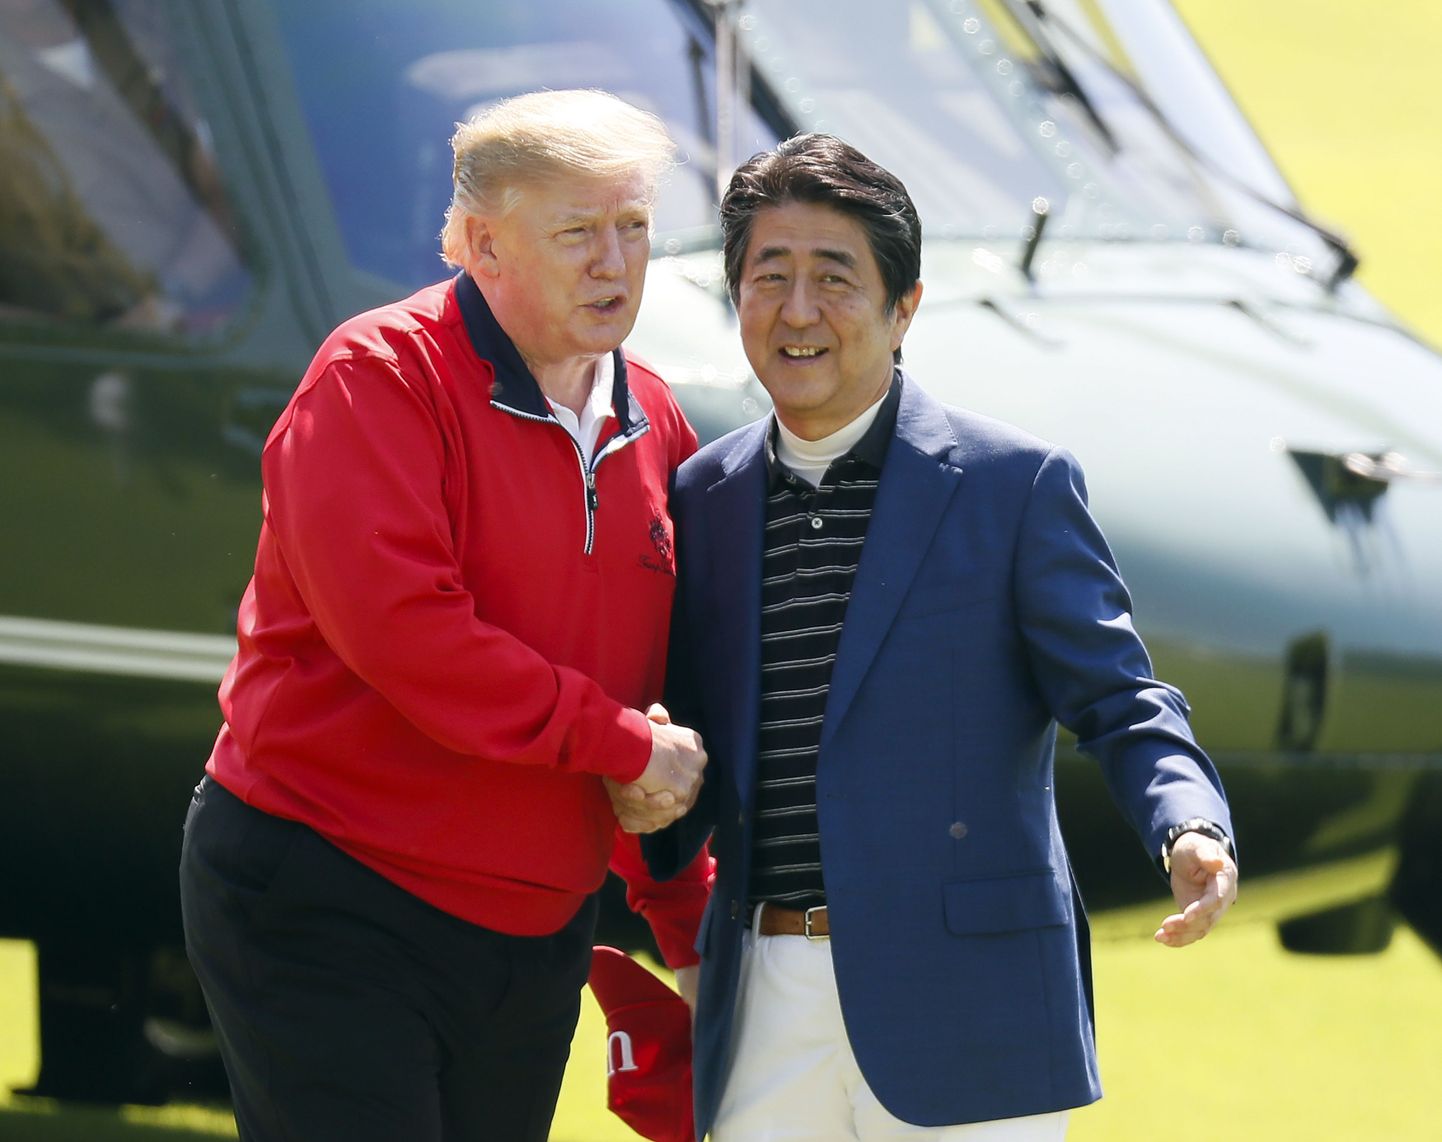 USA president Donald Trump ja Jaapani peaminister Shinzo Abe.